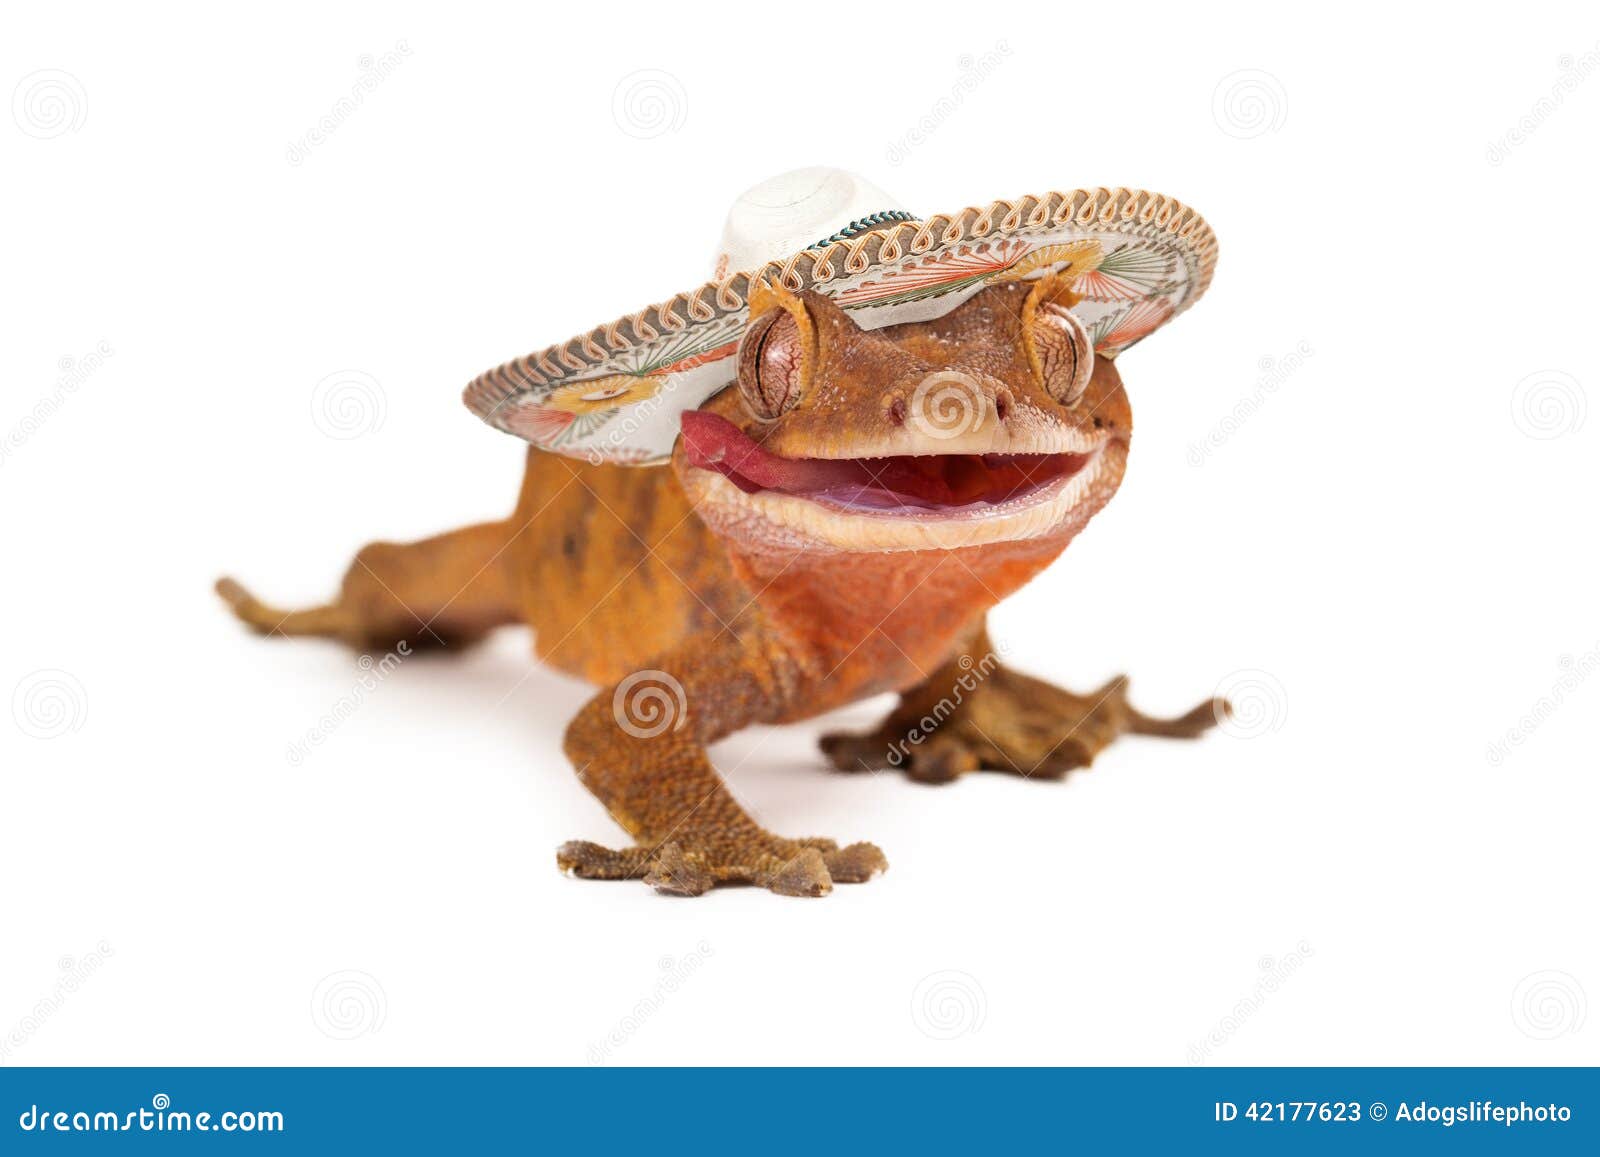 Sombrero Hat for Reptiles